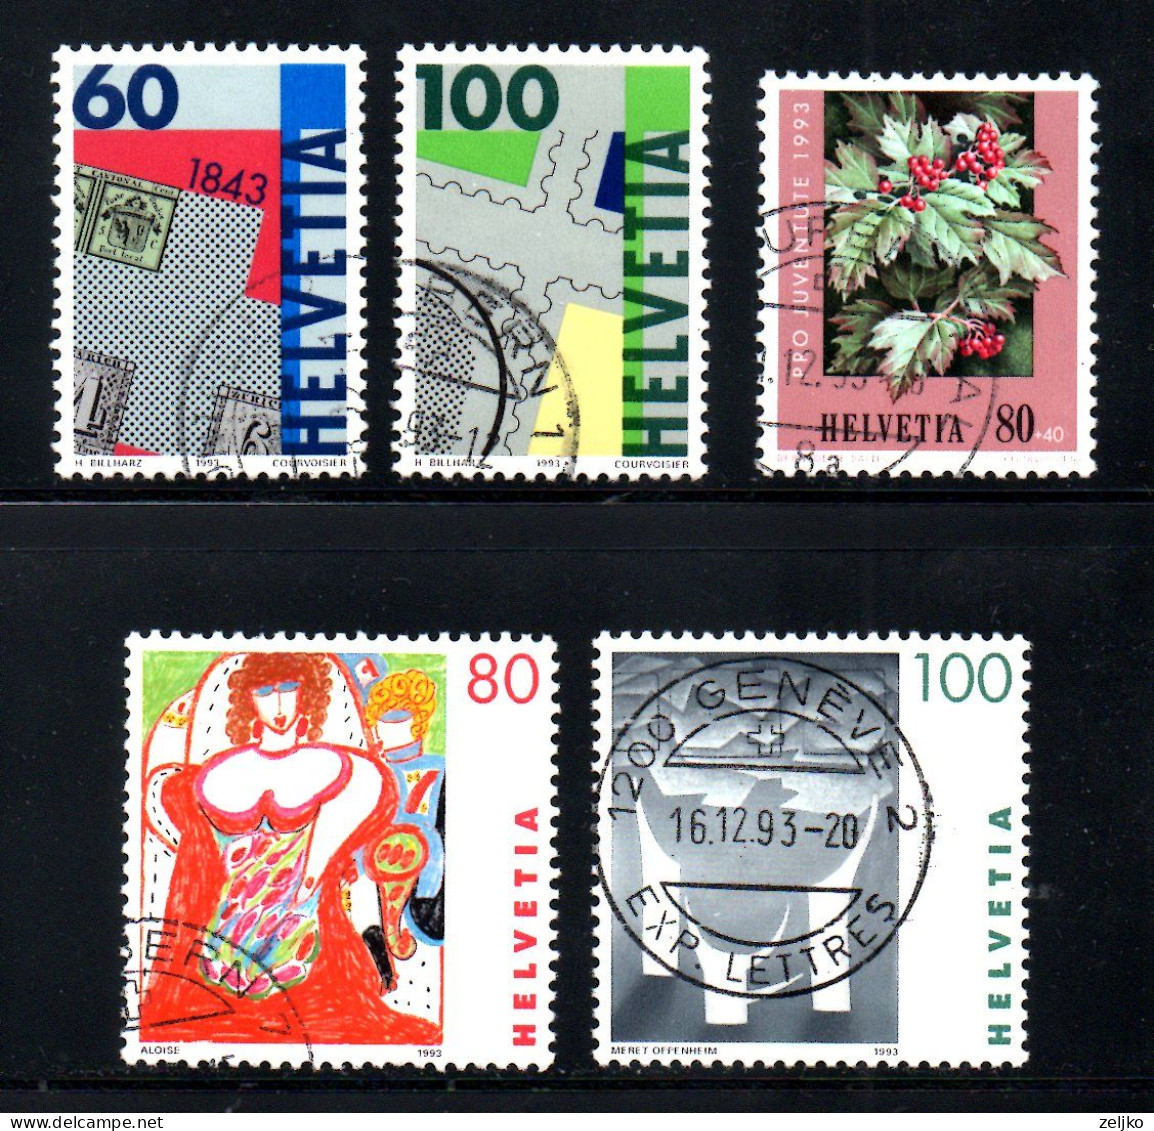 Switzerland, Used, 1993, Michel 1496, 1498, 1507, 1508, 1514, Lot - Usados